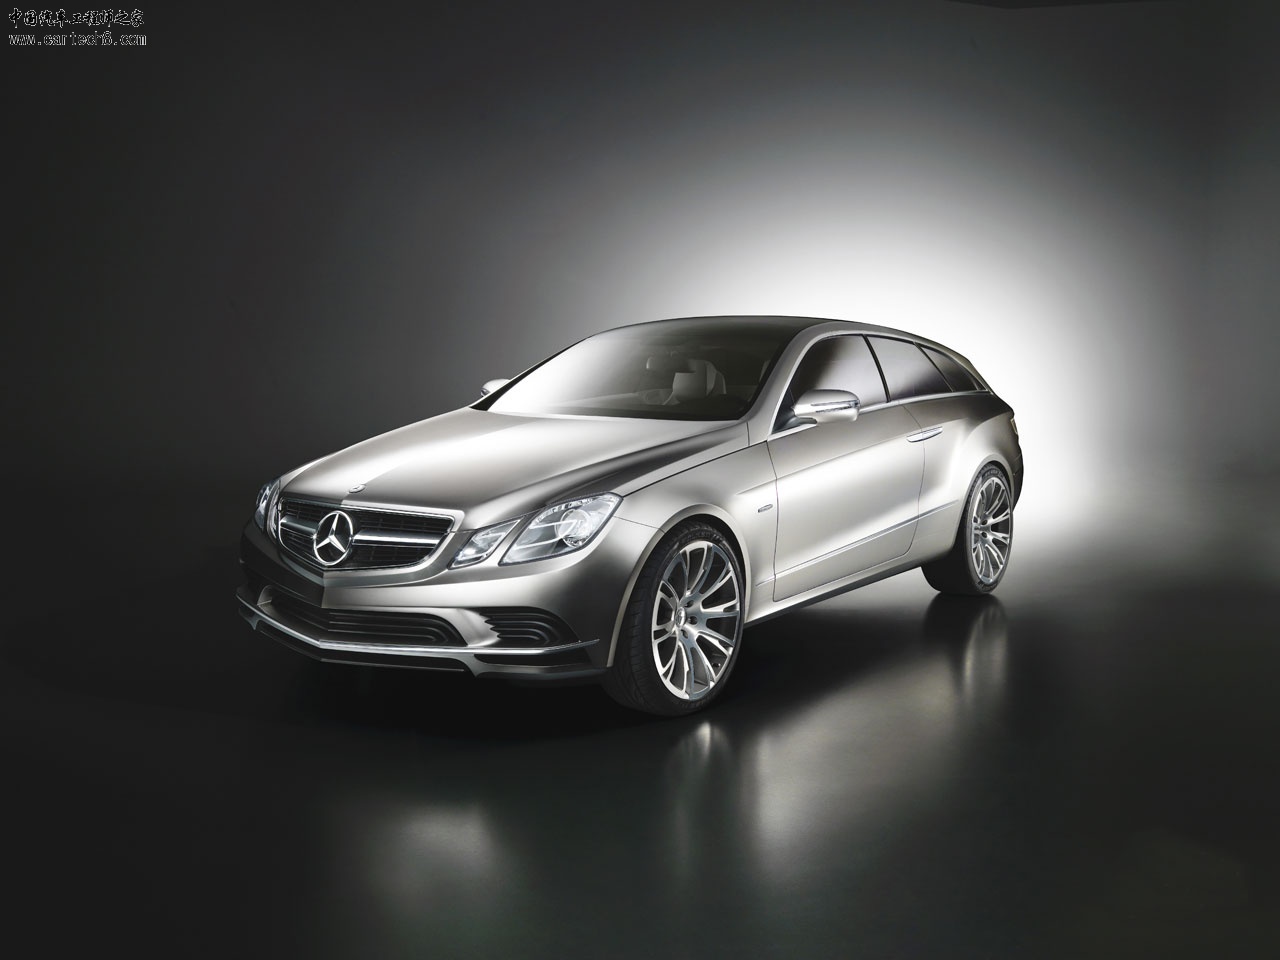 Mercedes-Benz-Concept-Fascination-07-lg.jpg